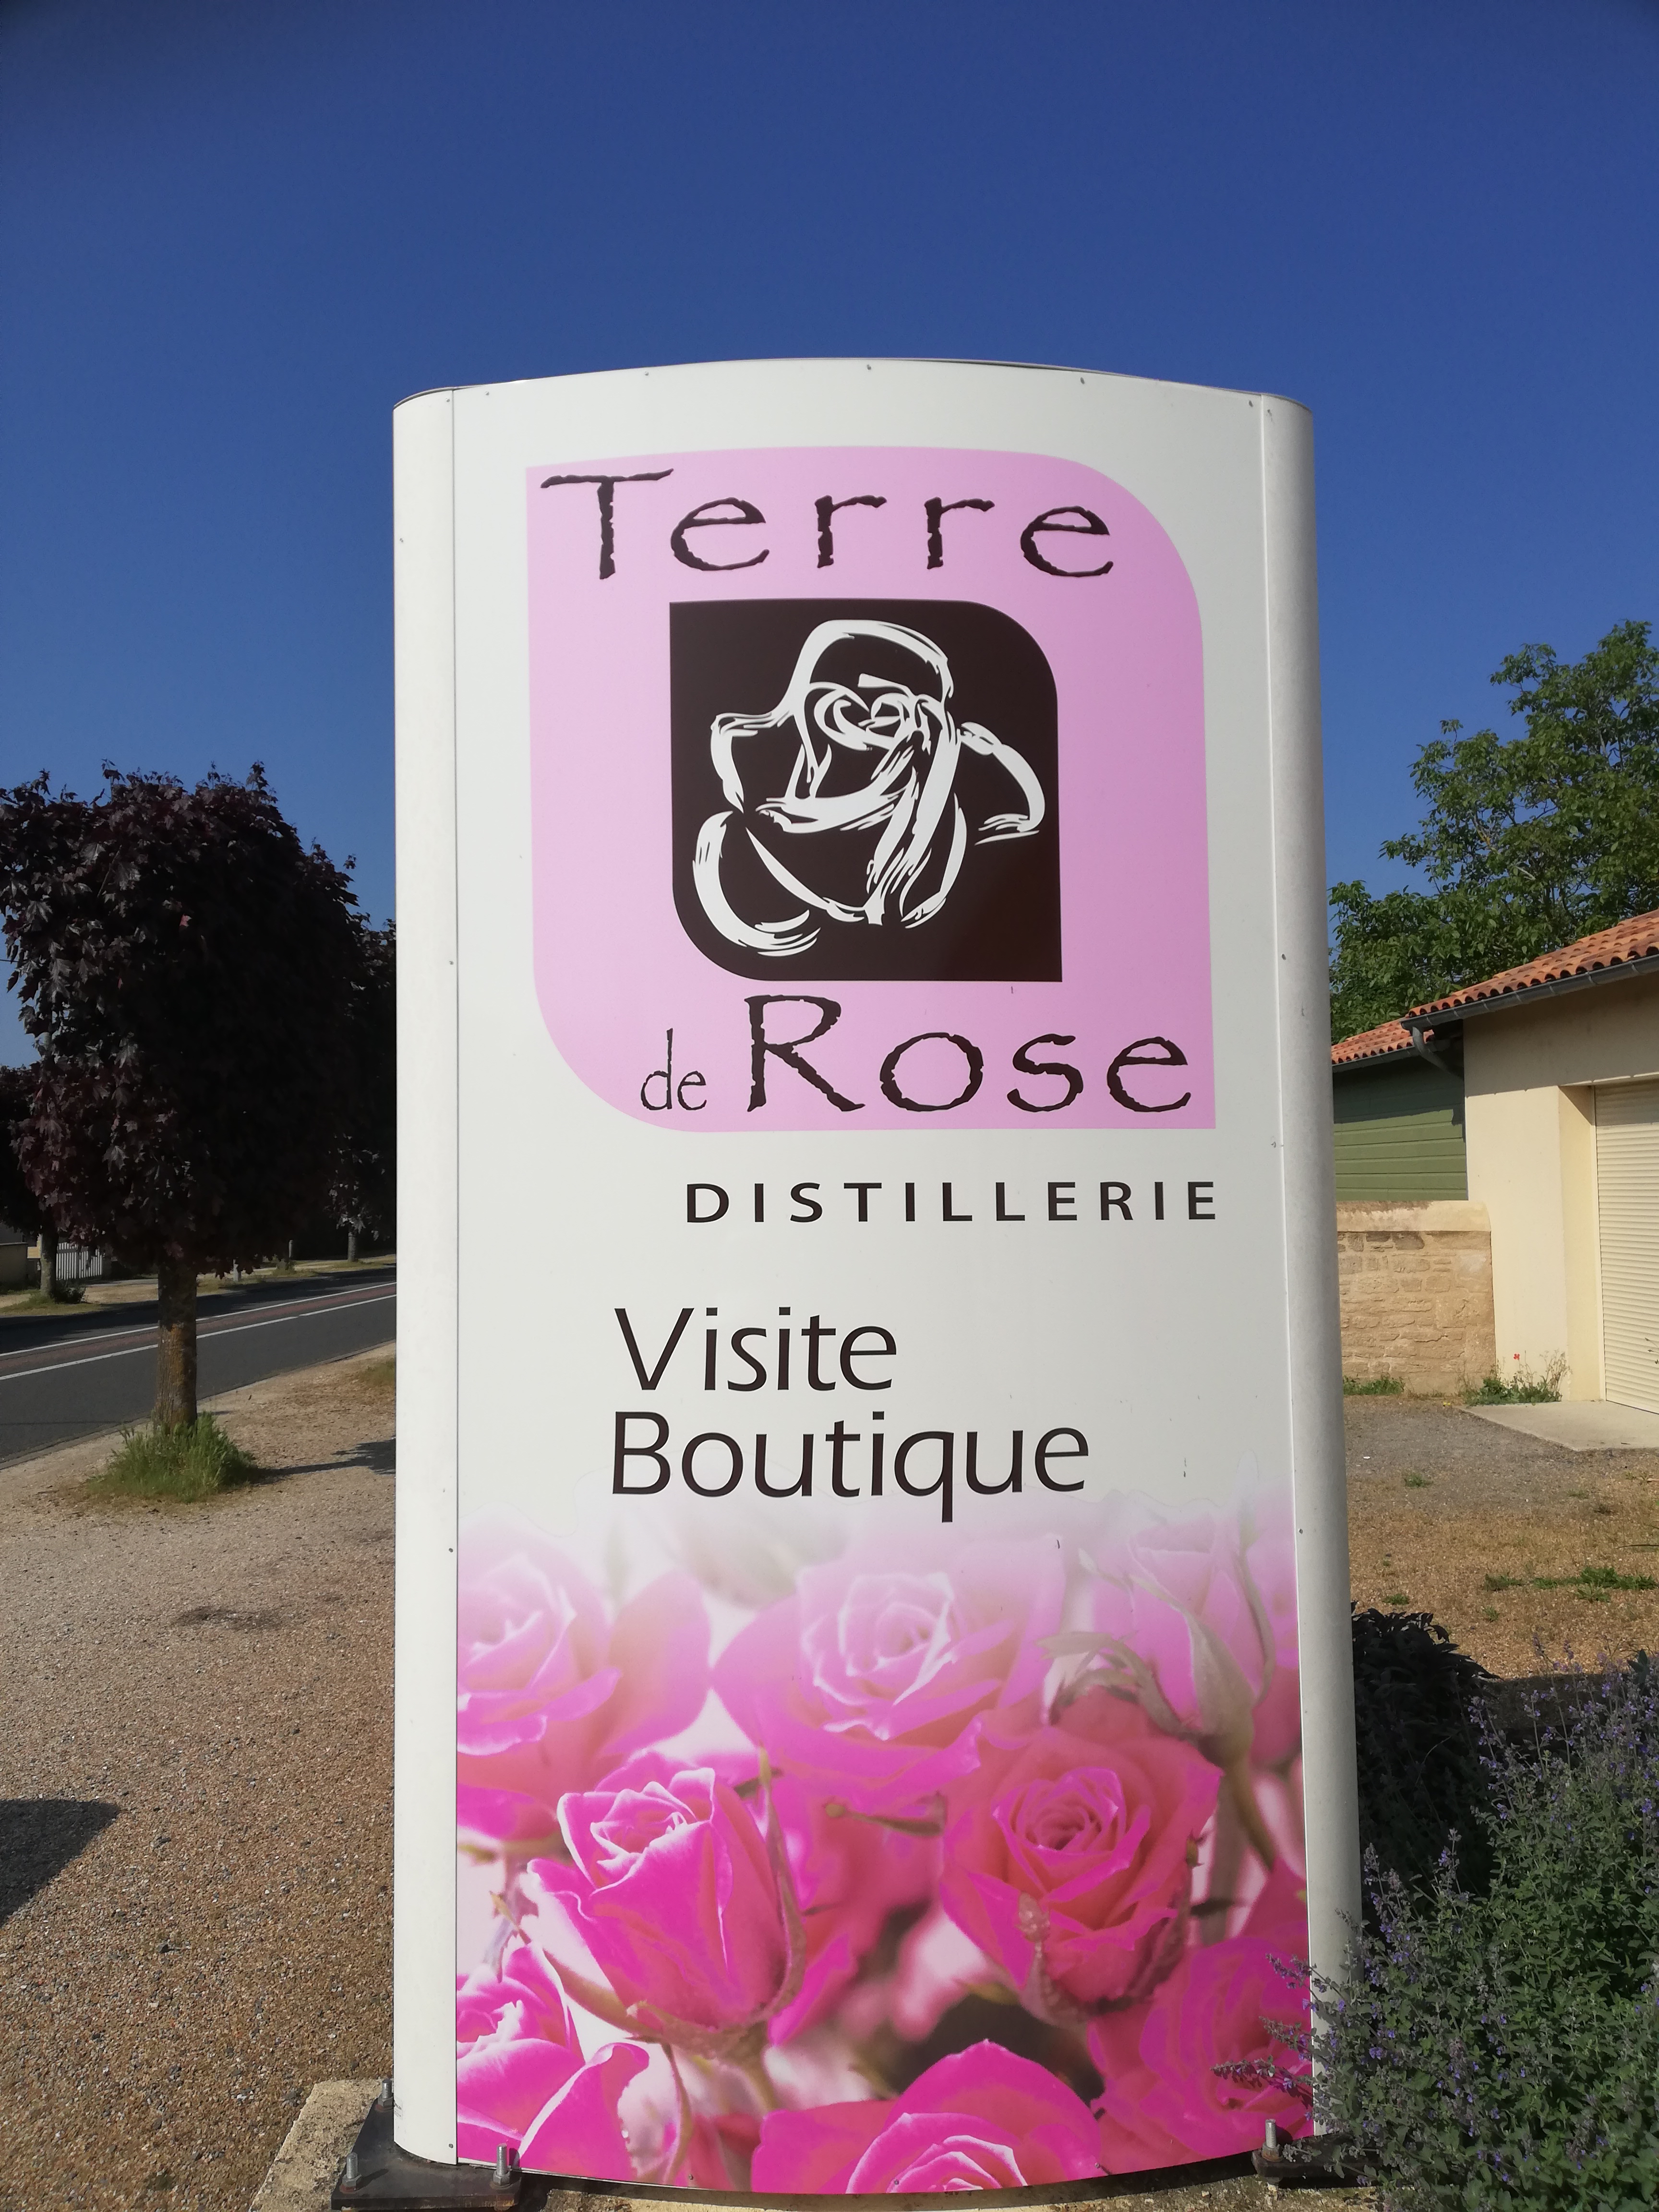 Entry to the Terre de Rose boutique